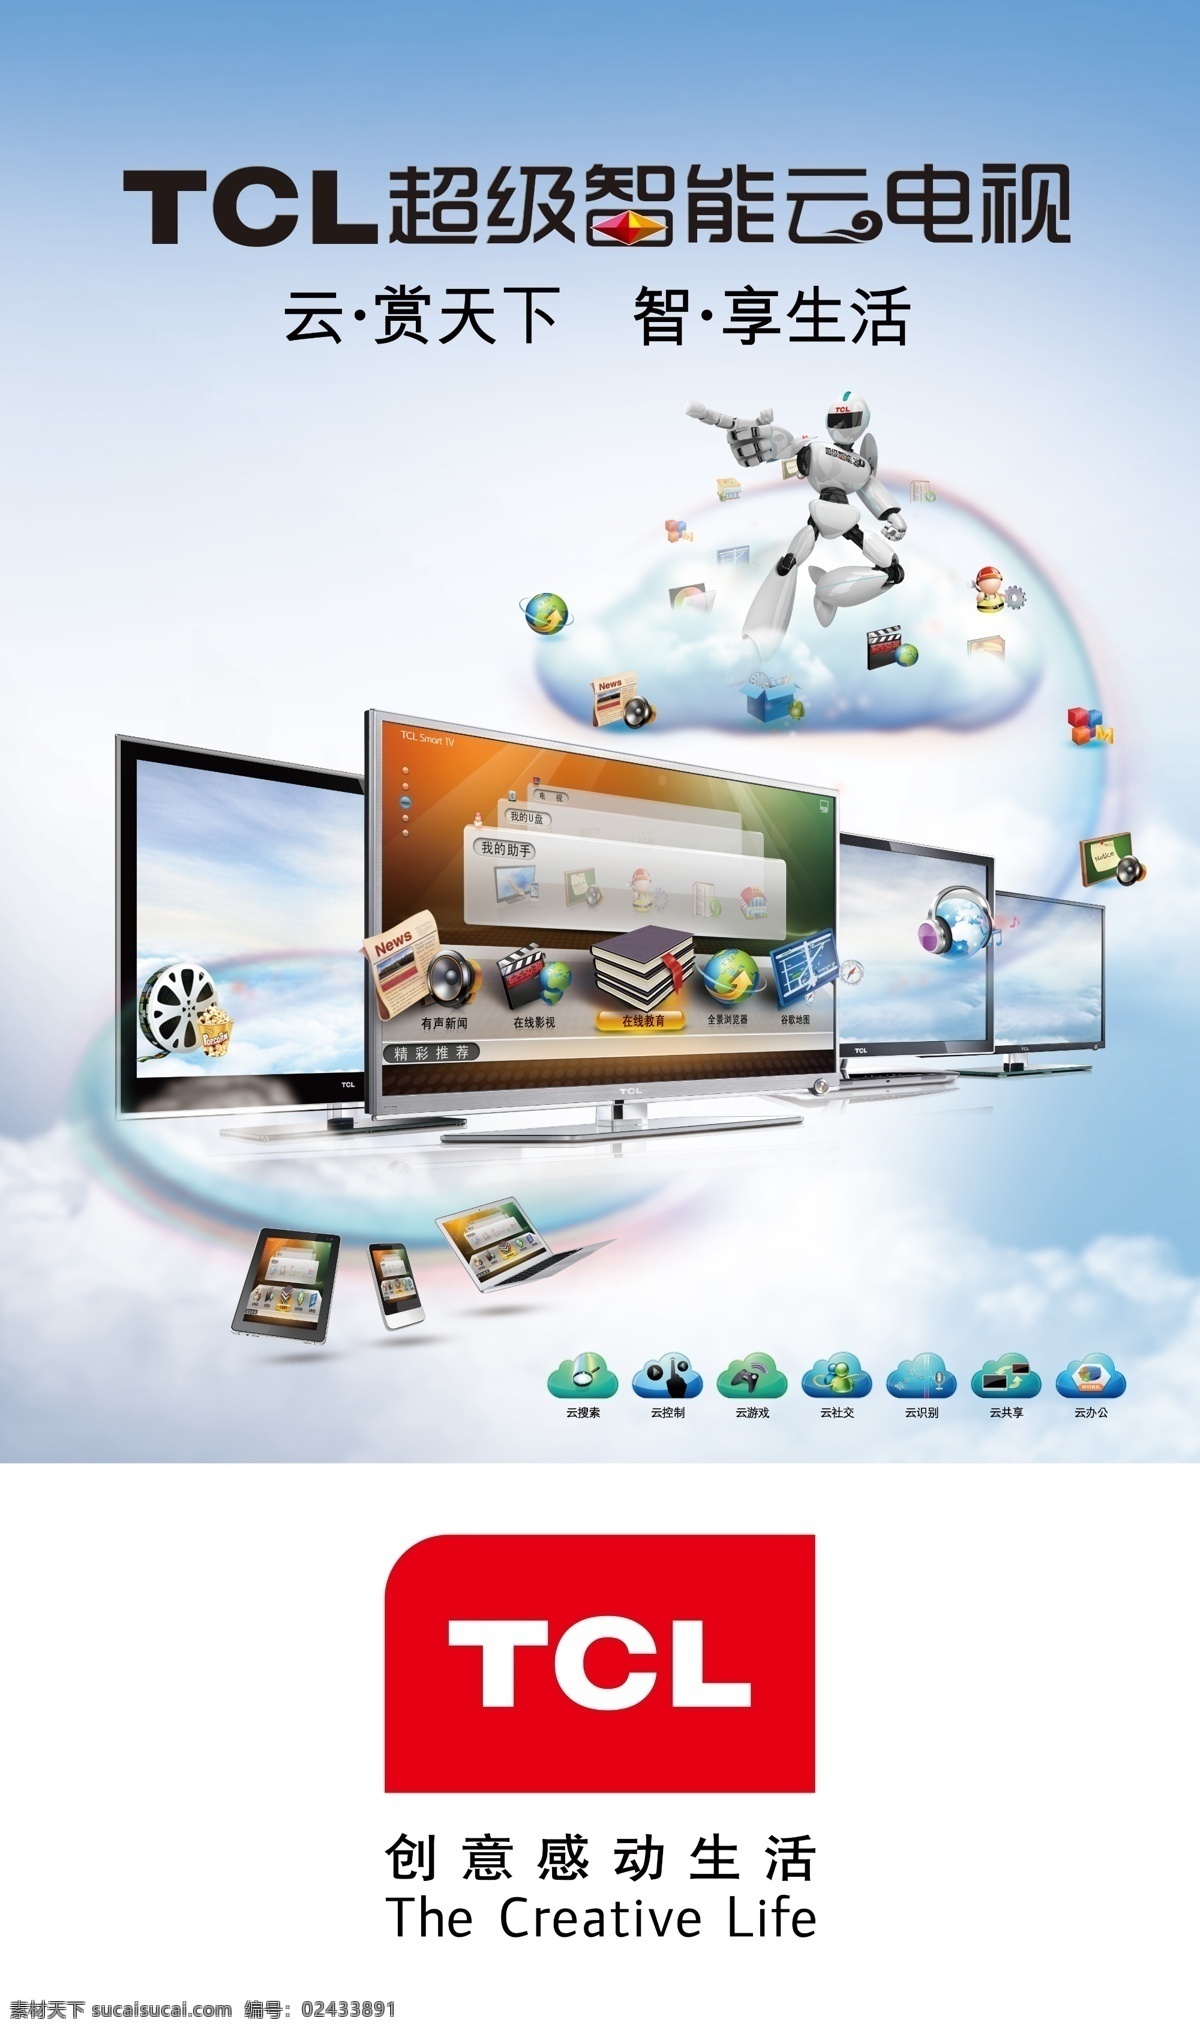 tcl 彩电 宣传 电视矩阵 机器人 礼品 云 tcl标志 小图标 液晶电视 广告设计模板 源文件